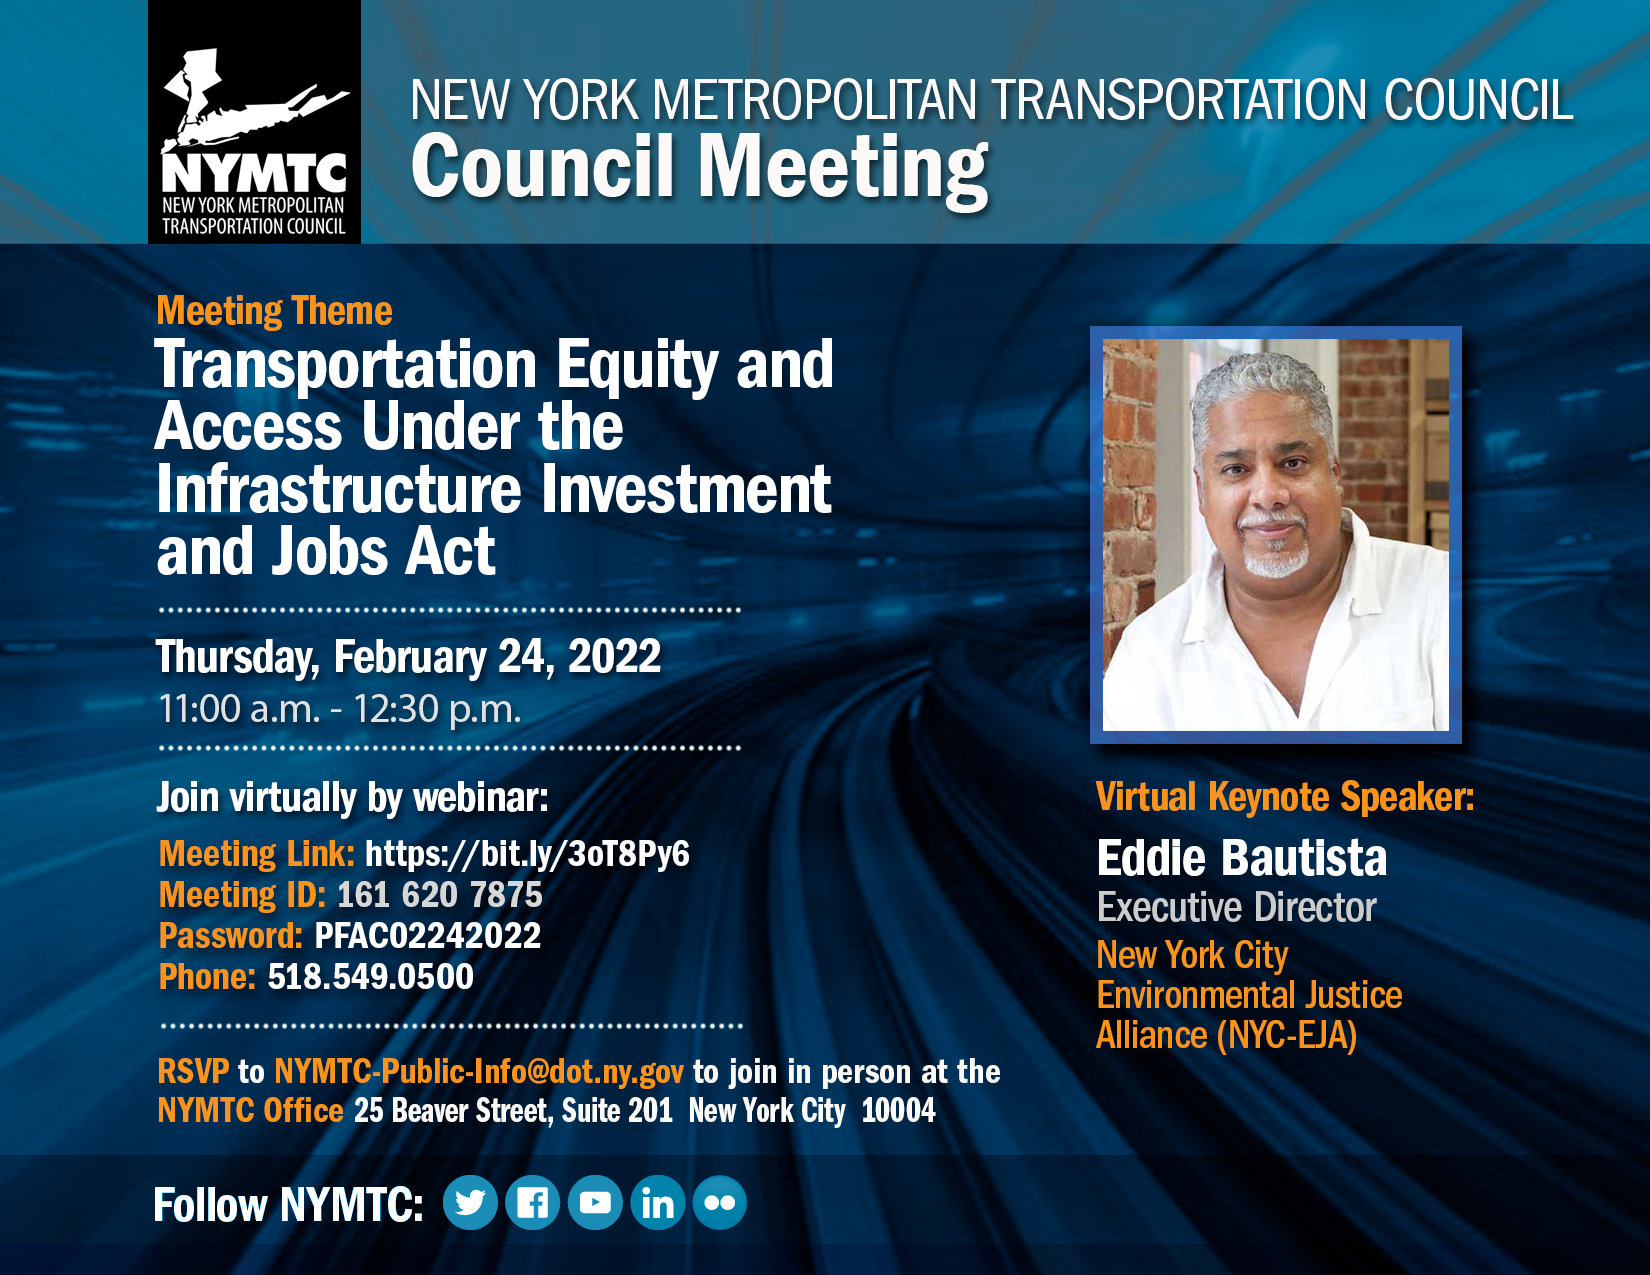 NYMTC Council Meeting postcard image